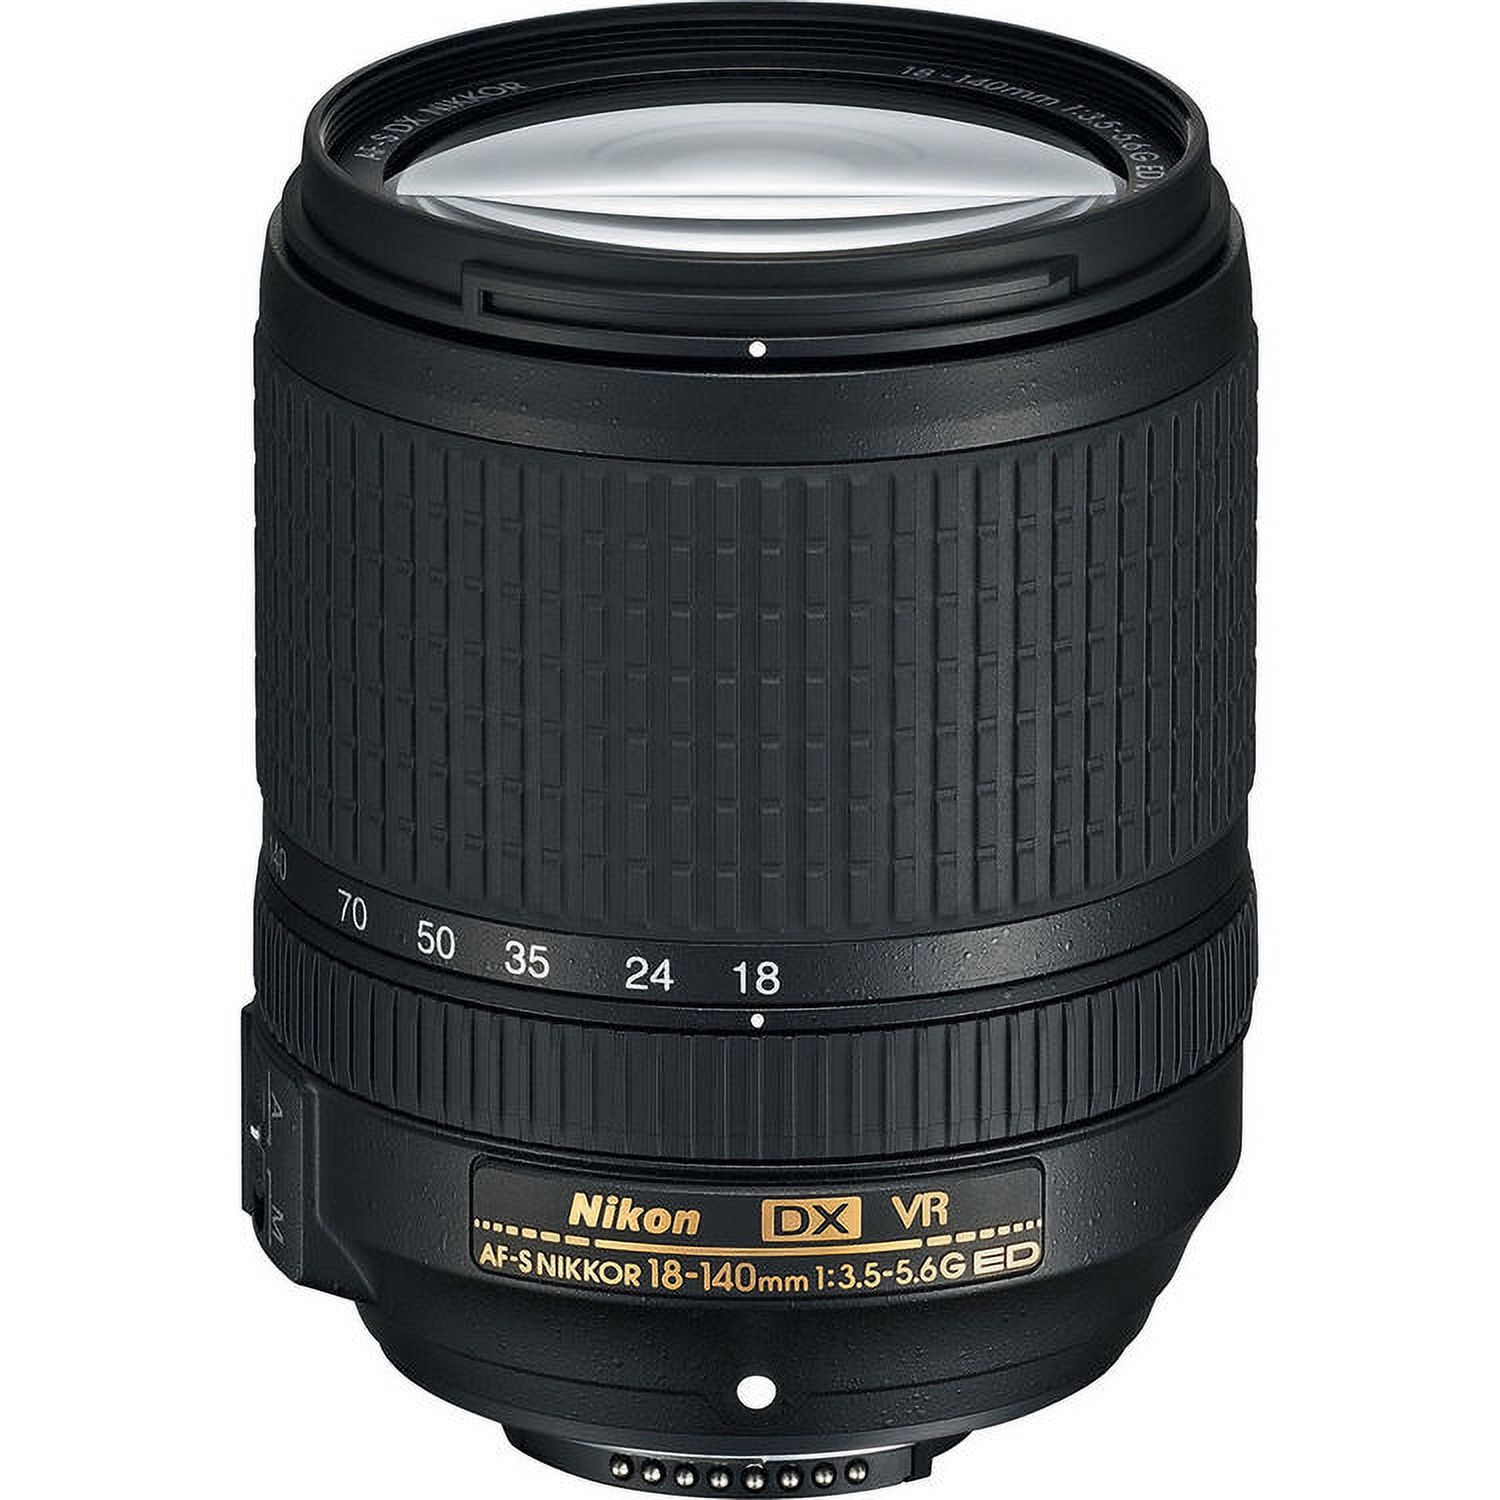 Nikon D7100 Digital SLR Camera 3 Lens: 18-140mm VR ||64GB ||Ultra Saving Kit, Black - image 3 of 10